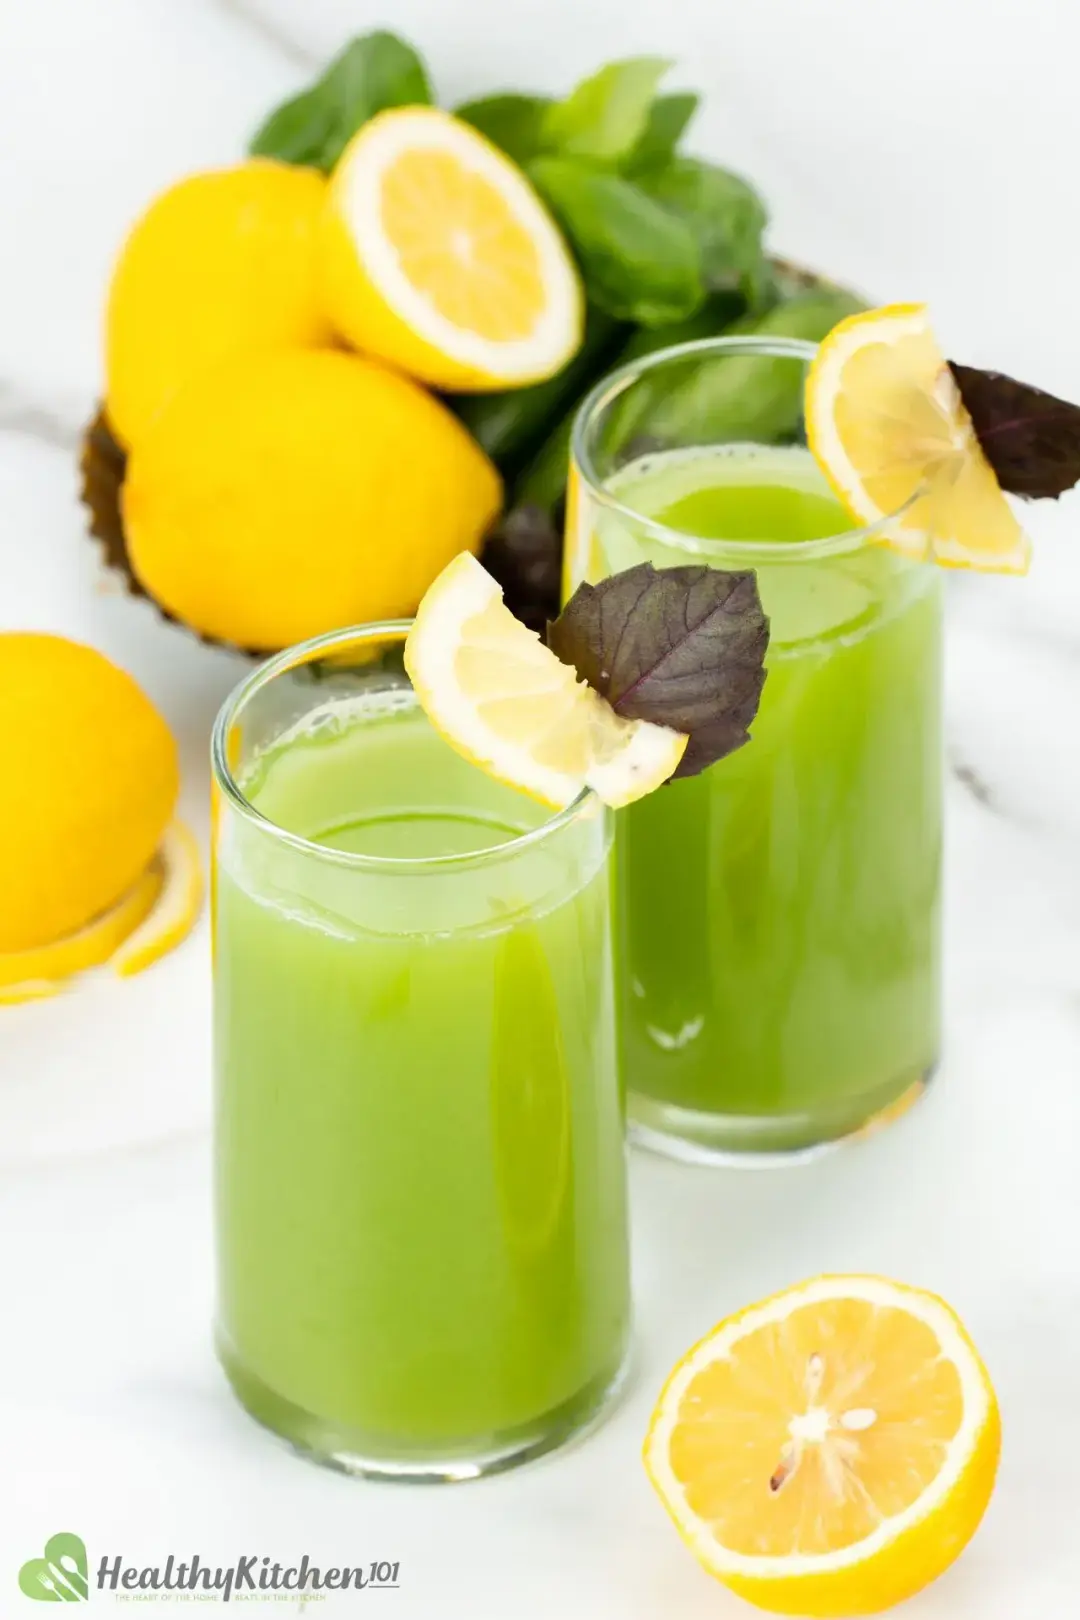 Cucumber and lemon juice